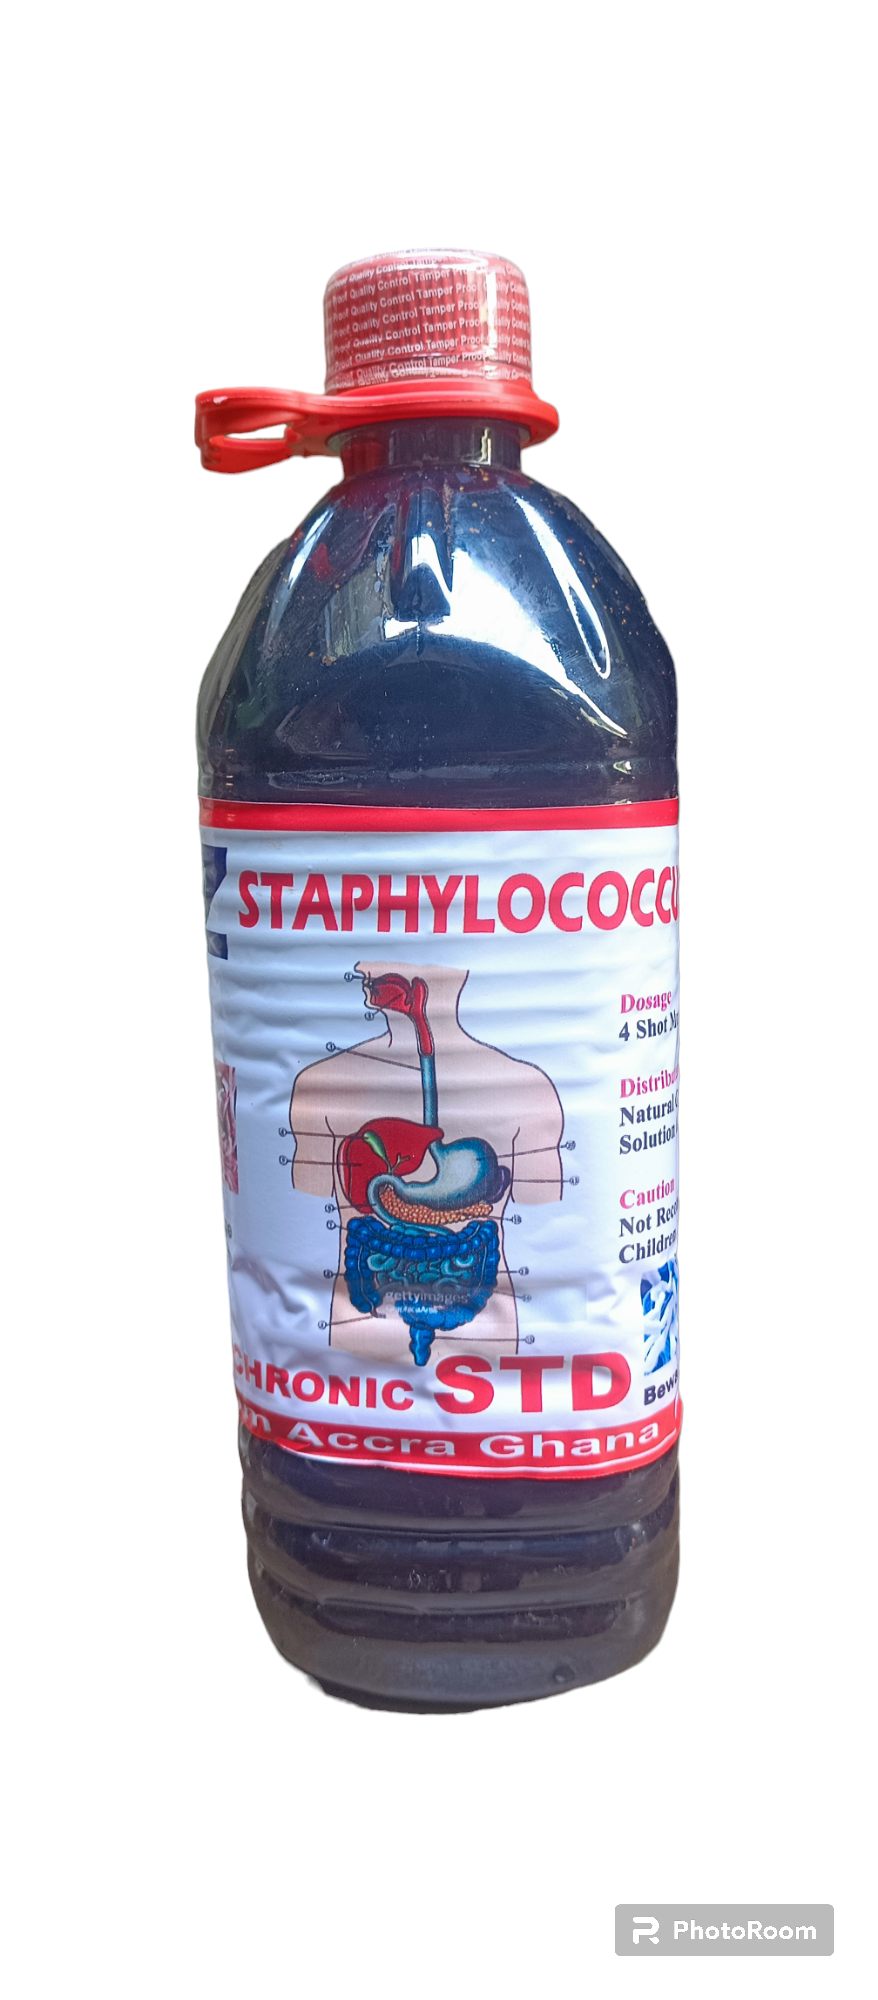 A-Z Staphylococcus Chronic STD